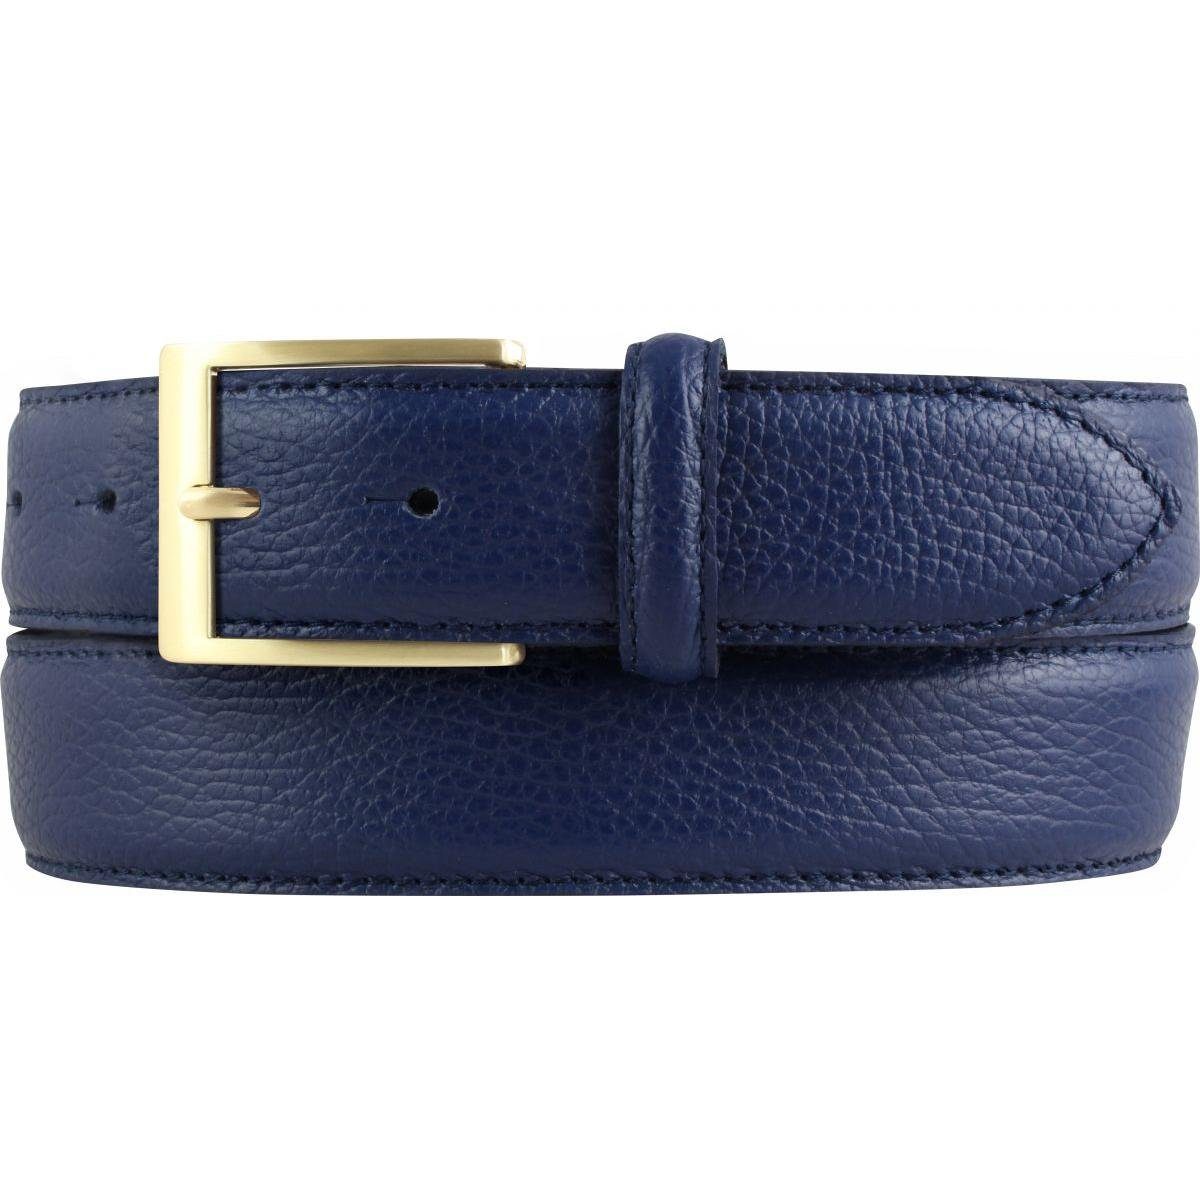 BELTINGER Ledergürtel Italienischer Anzug-Gürtel, Blau, breit, Herren, 35 Gold mm Hosengür Anzuggürtel